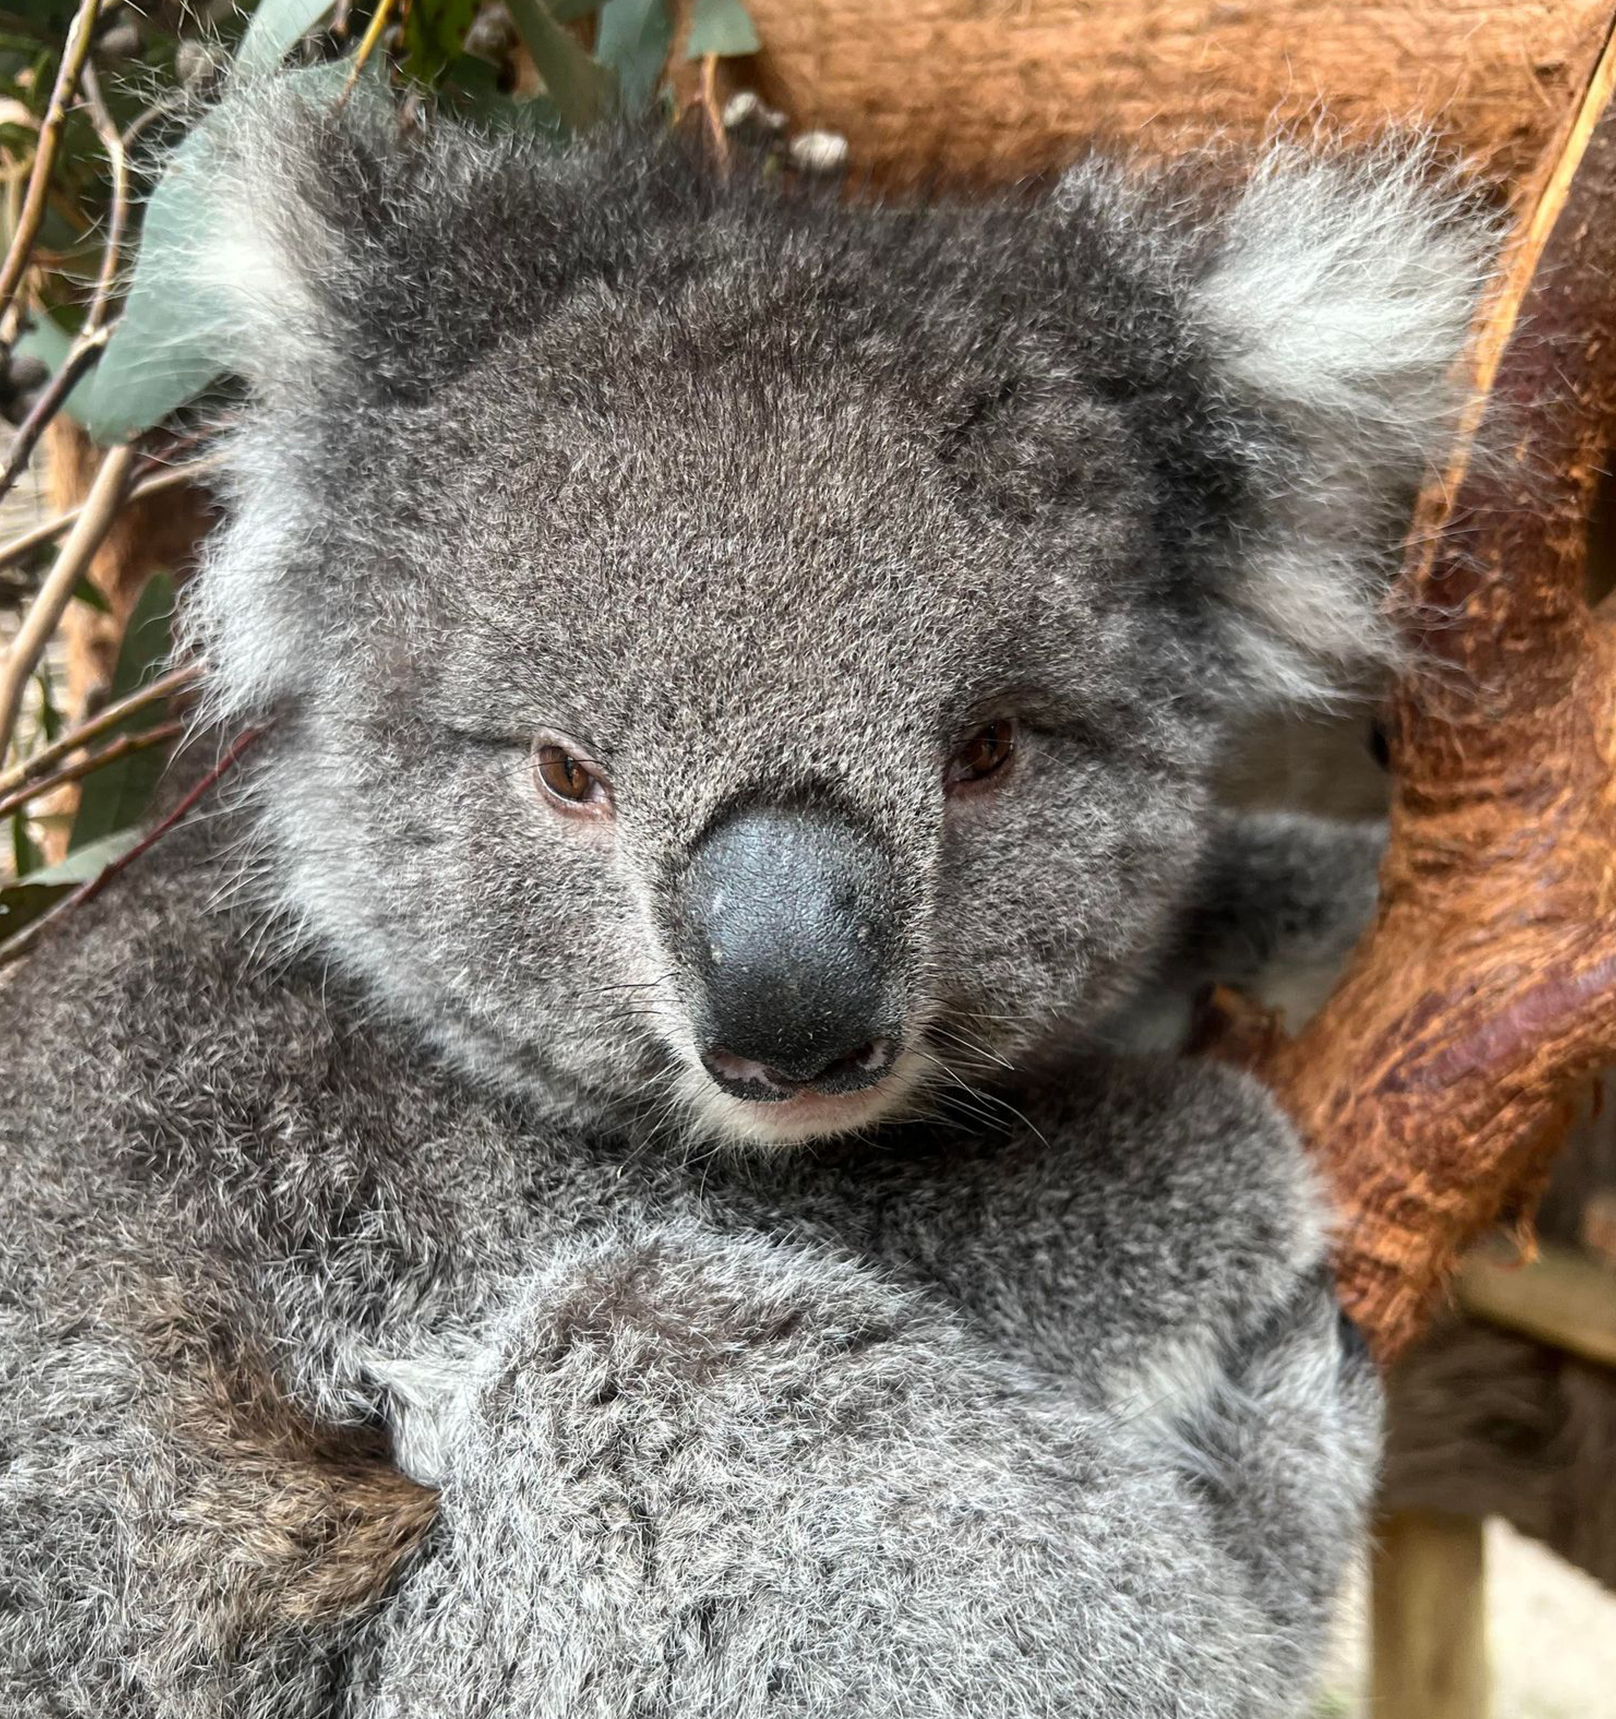 Koala Archive - Page 2 of 16 - Australian Koala Foundation